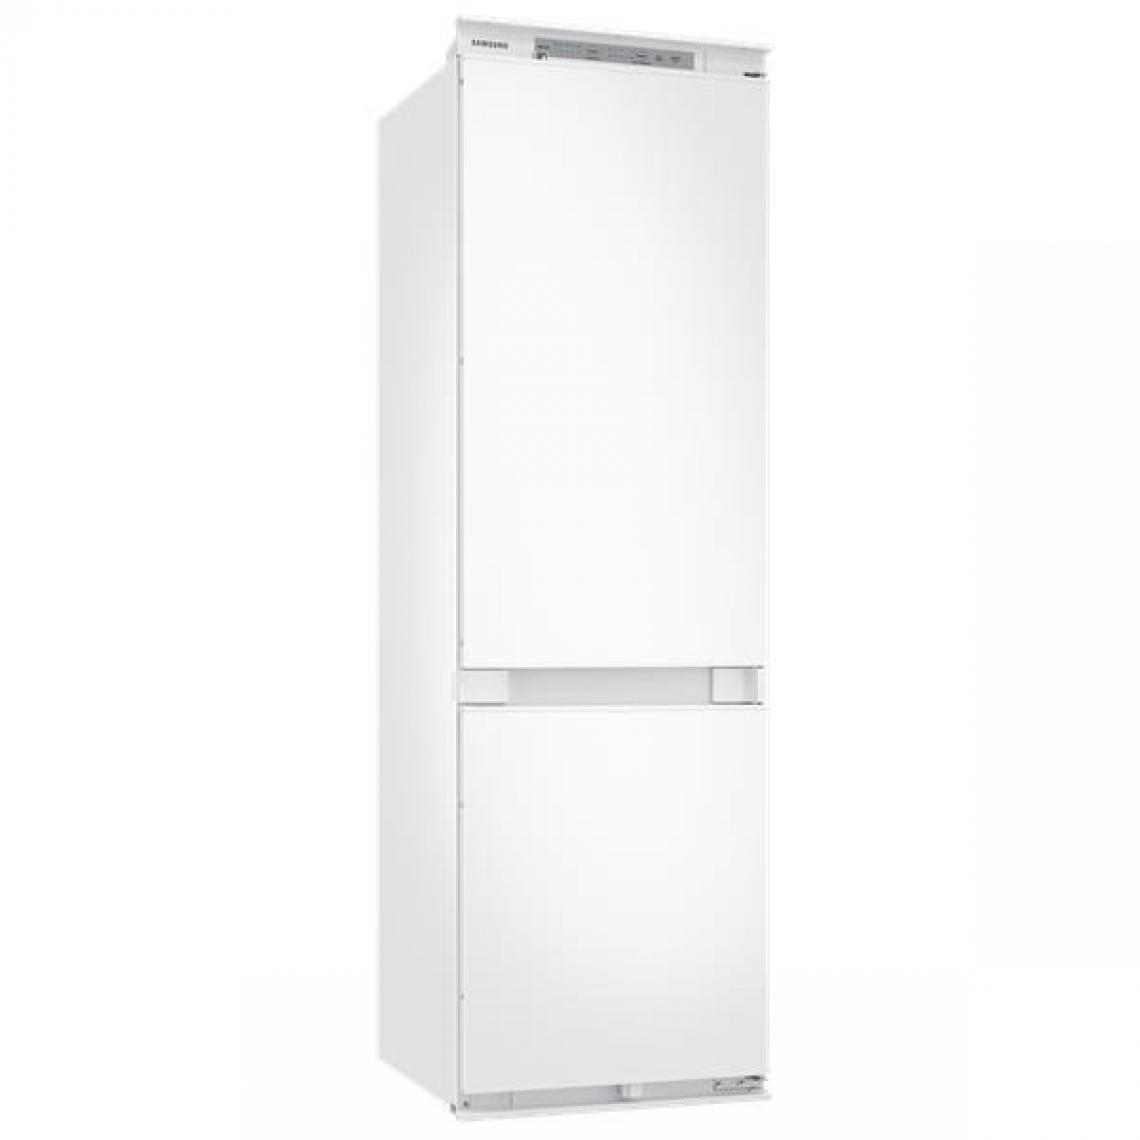 Samsung - samsung - brb2g600fww - Réfrigérateur